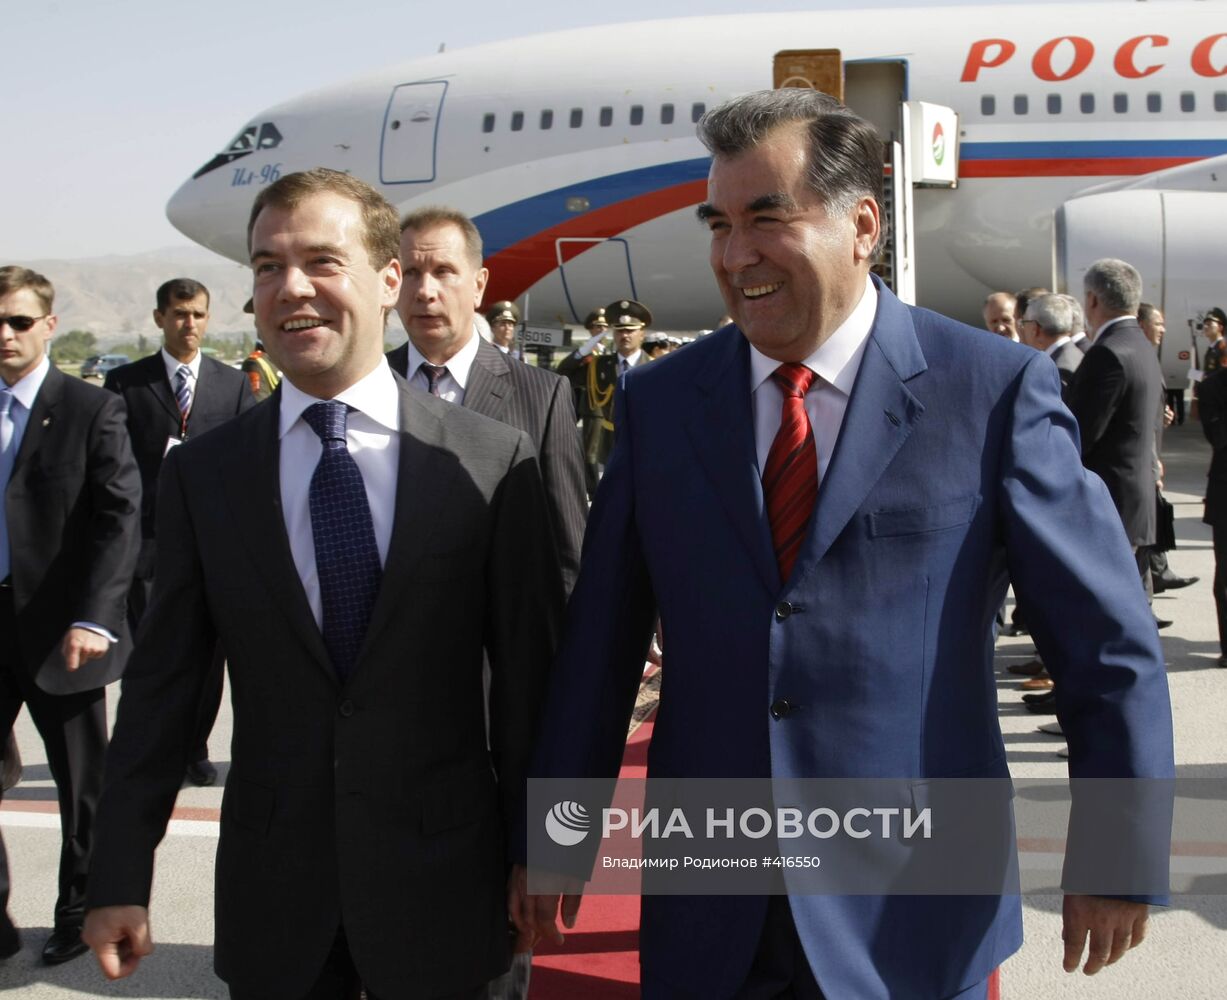 Рабочий визит президента РФ Д.Медведева в Республику Таджикистан